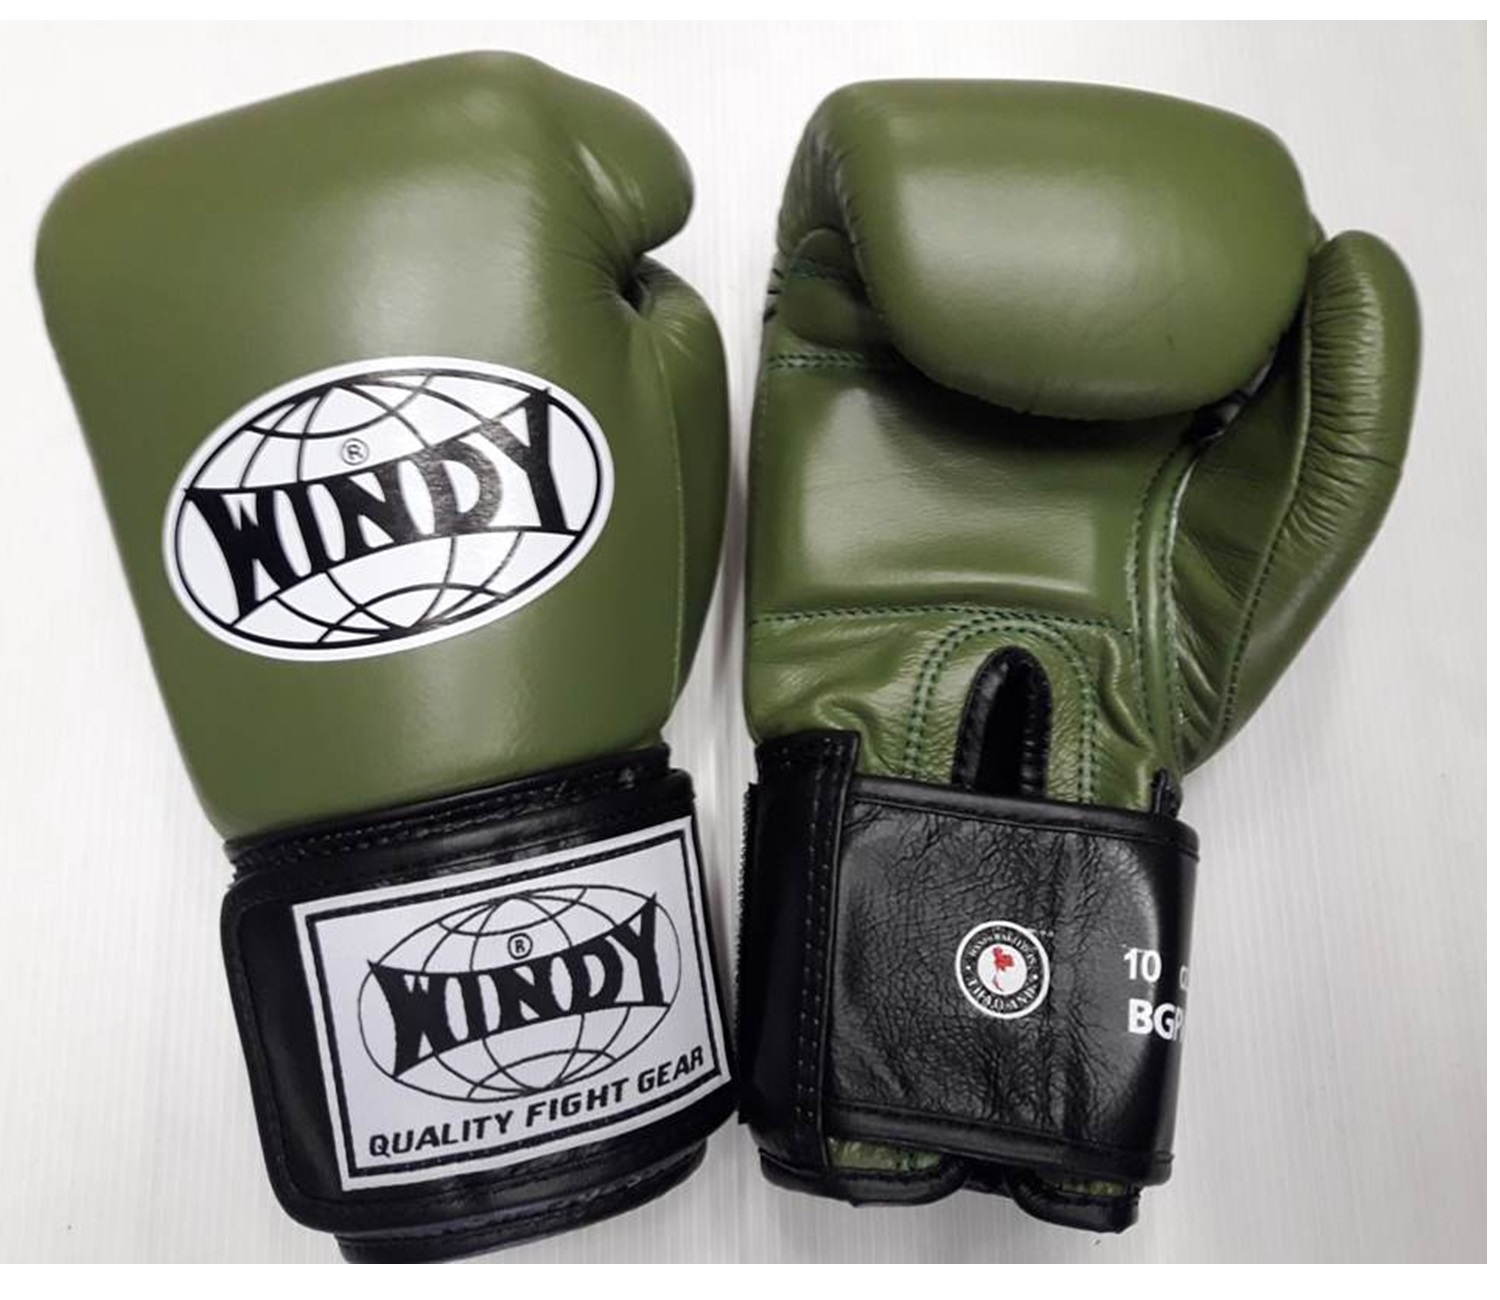 Windy sports Boxing Gloves BGP Proline Green  genuine leather 8,10.12,14,16 oz นวมชก มวยไทย วินดี้สปอร์ต สีเขียวมะกอก เมจิคเทป โปรไลน์ ทำจากหนังแท้